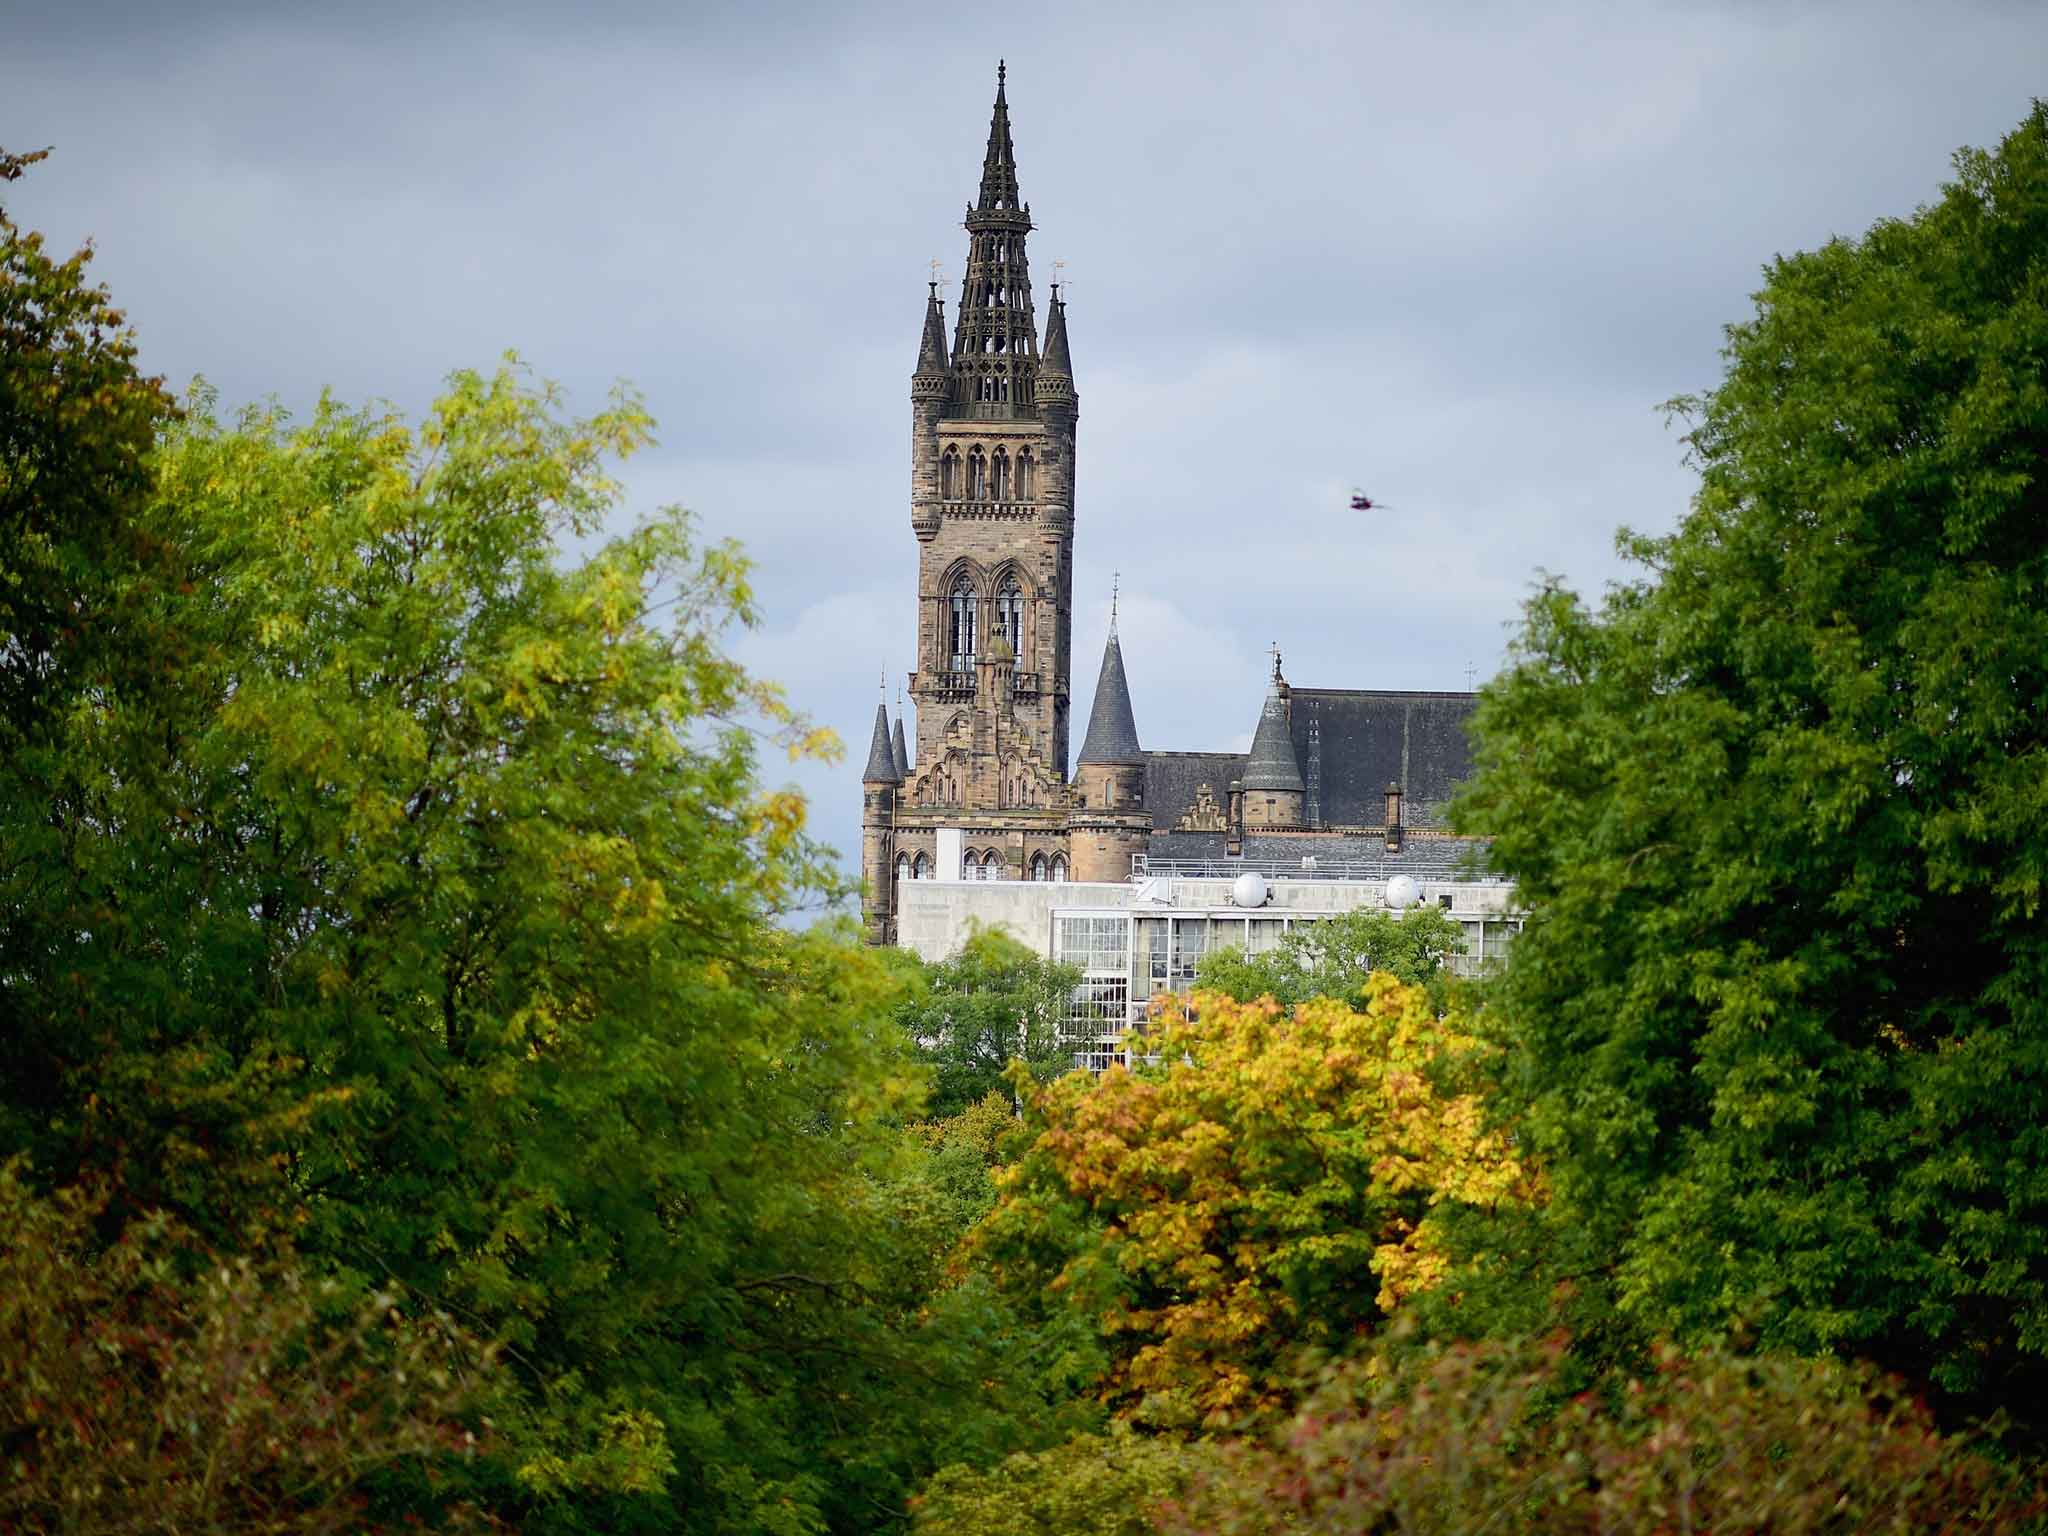 Glasgow University said it stood to lose an estimated £28.7 million a year